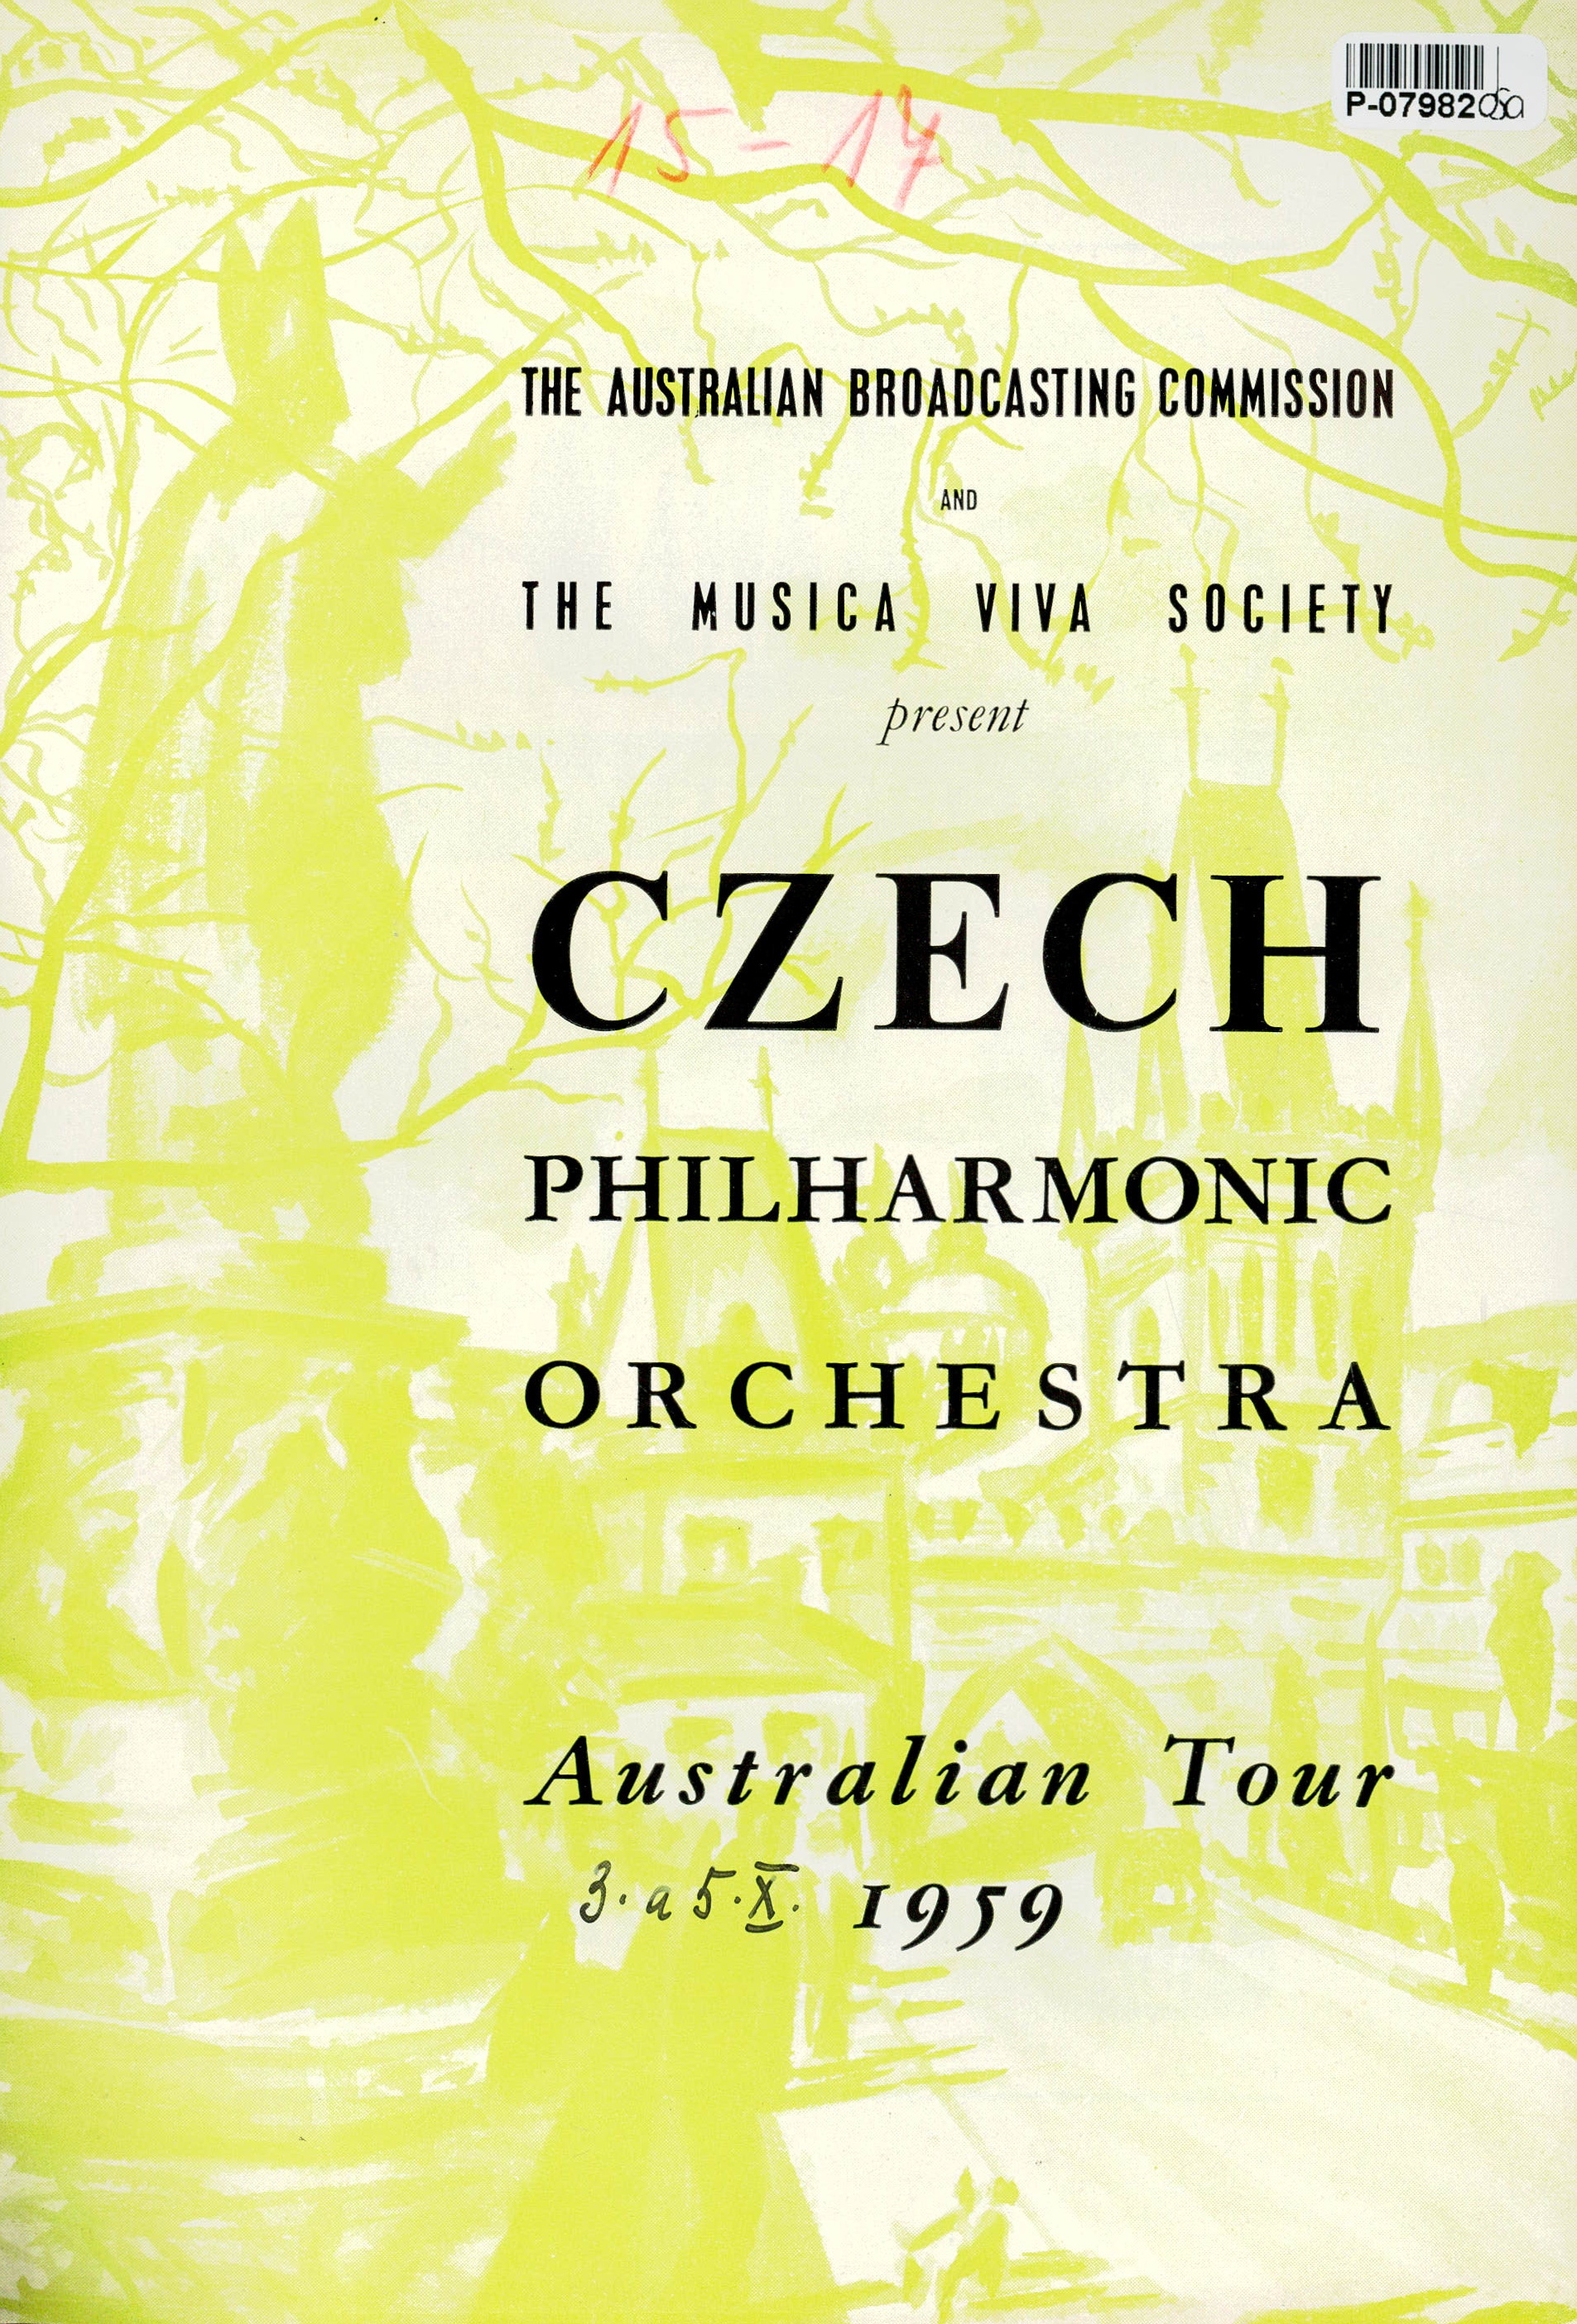 Czech Philharmonic orchestra